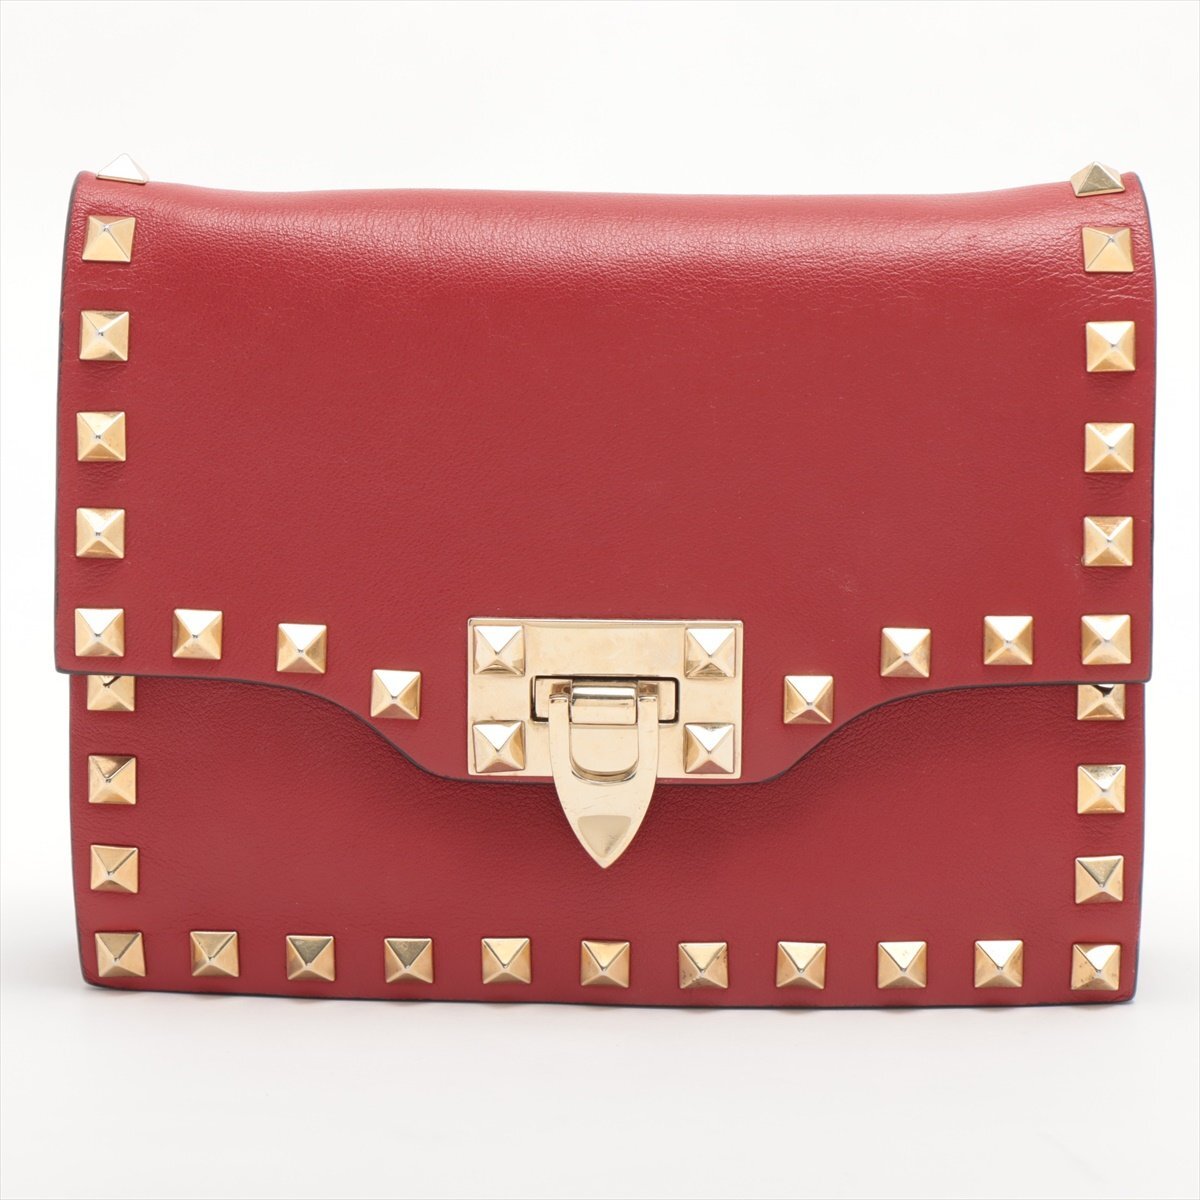 1 jpy # beautiful goods # Valentino # lock studs # leather #2WAY chain shoulder bag diagonal .. clutch hand lady's TTT 2.3-5